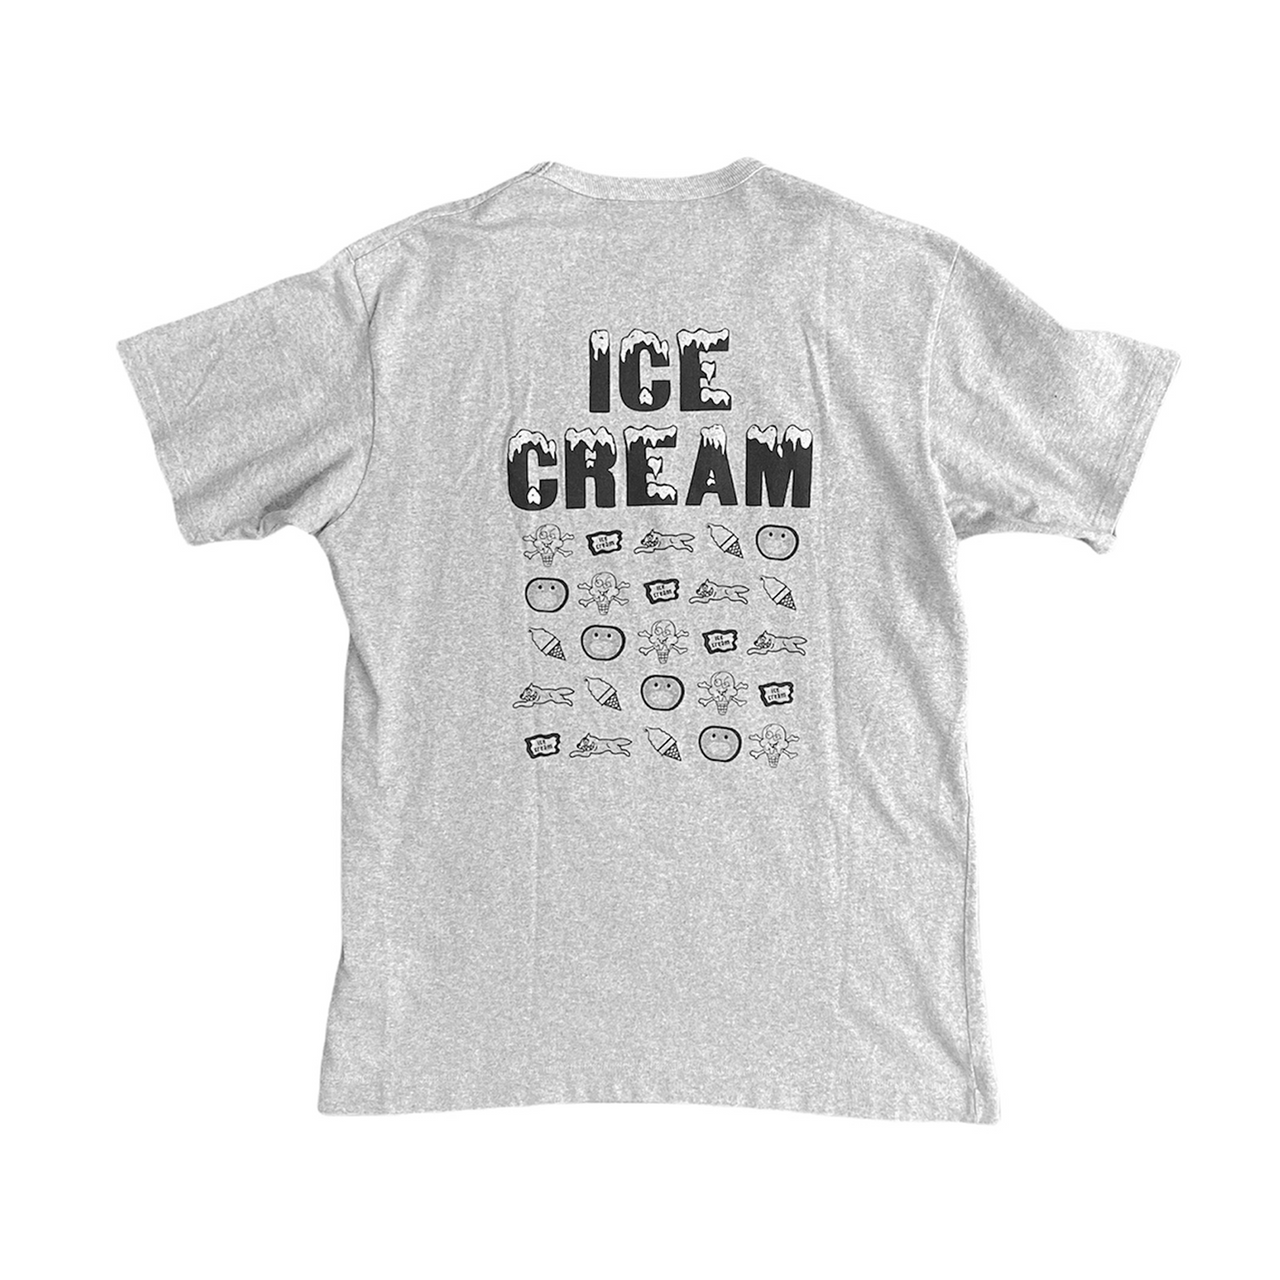 BBC Ice Cream Made in Japan Tshirt